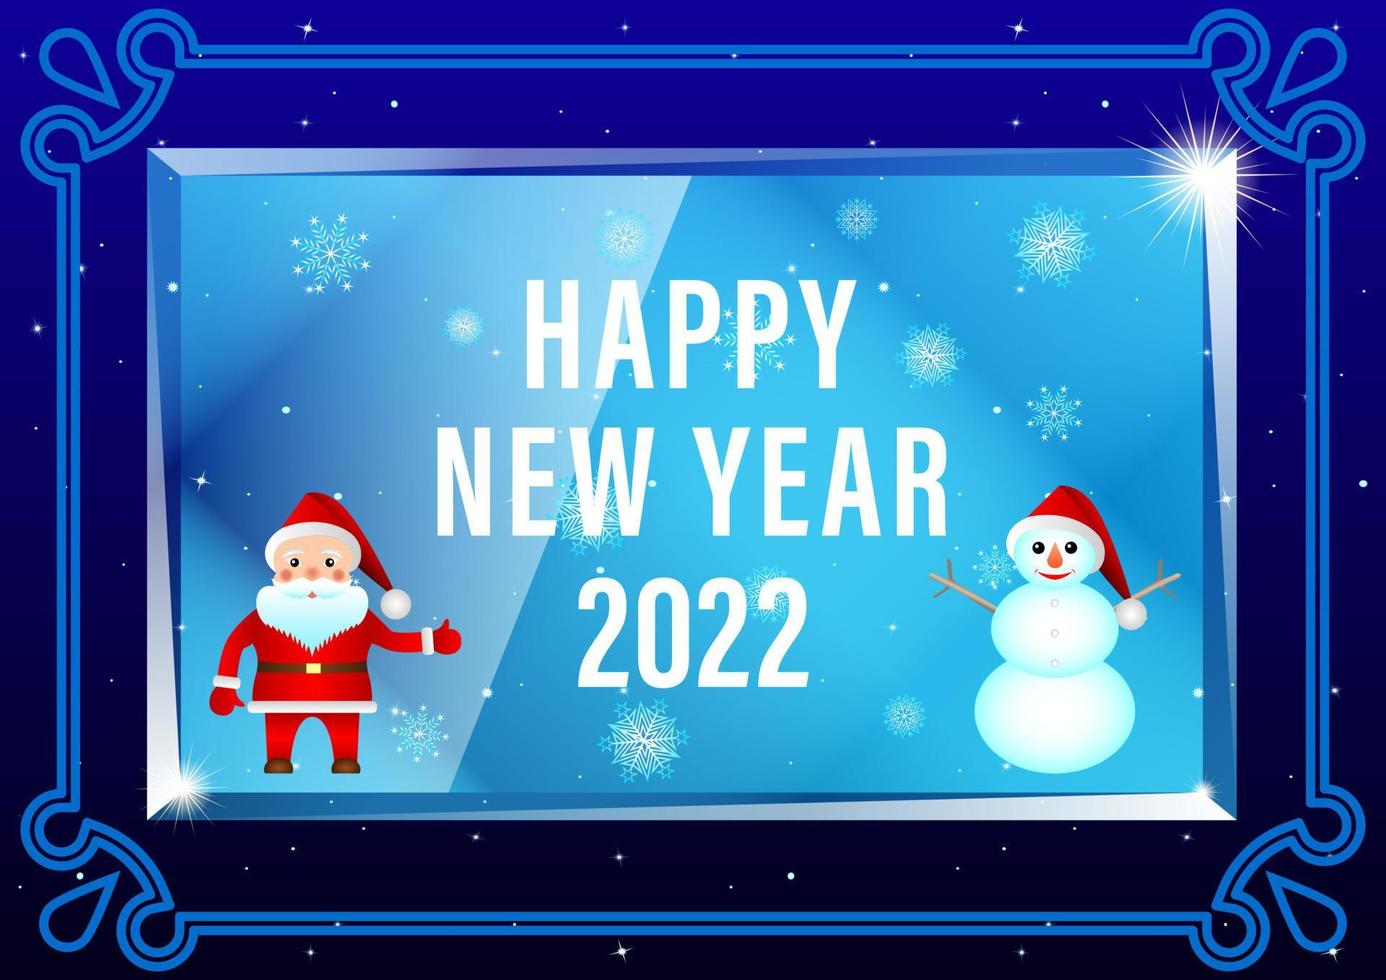 Happy New Year 2022 ice background vector